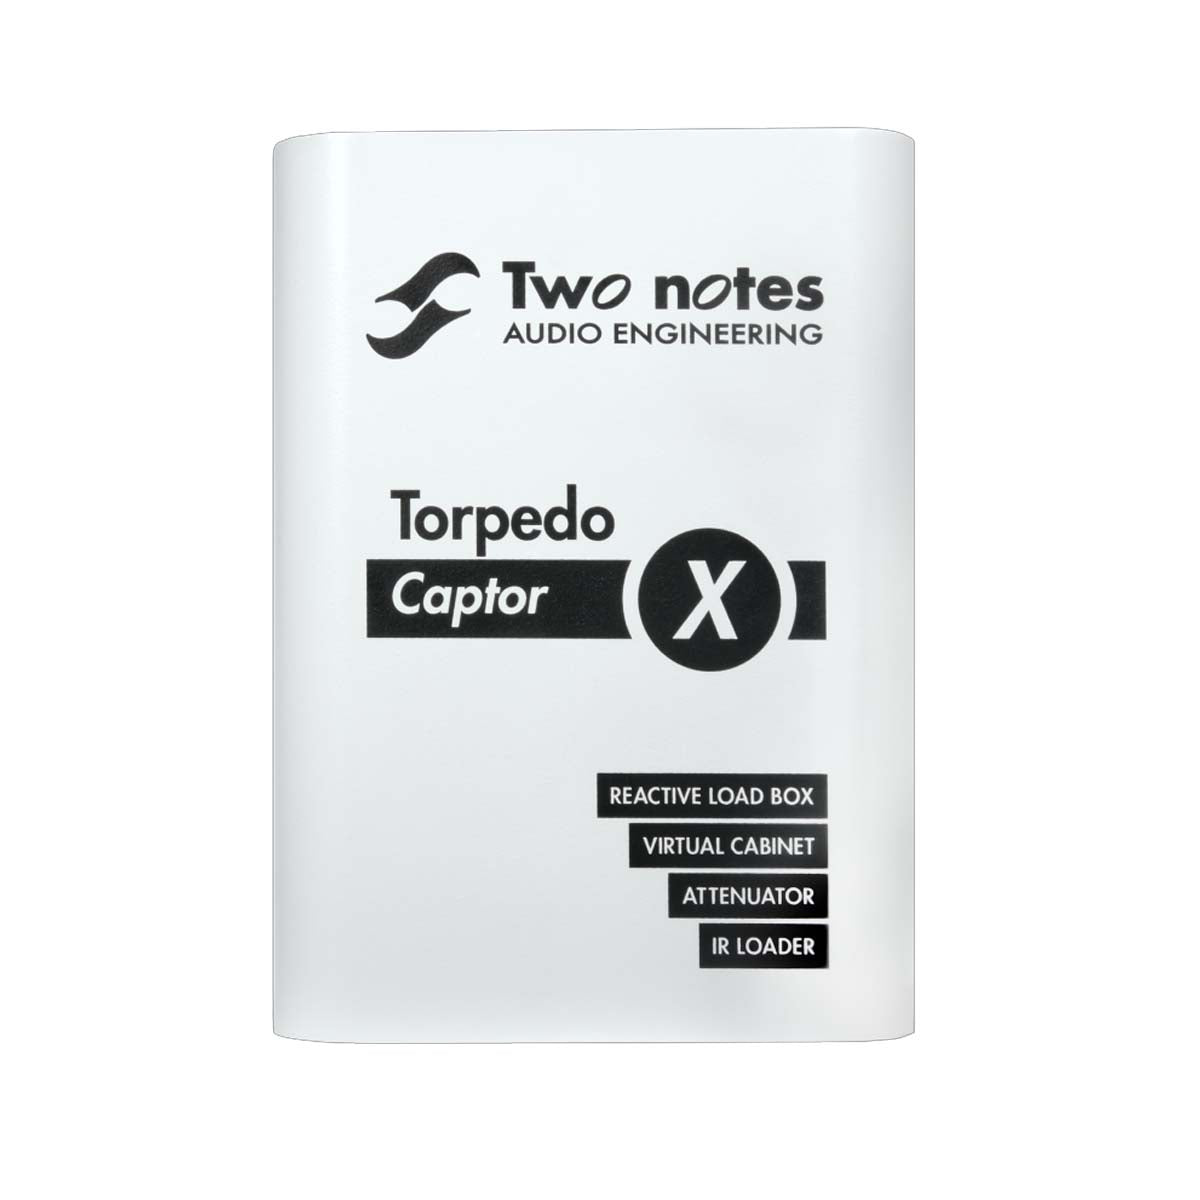 Two Notes Torpedo Captor X 16ohm Reactive LoadBox w/ Analog Speakersim & Attenuator